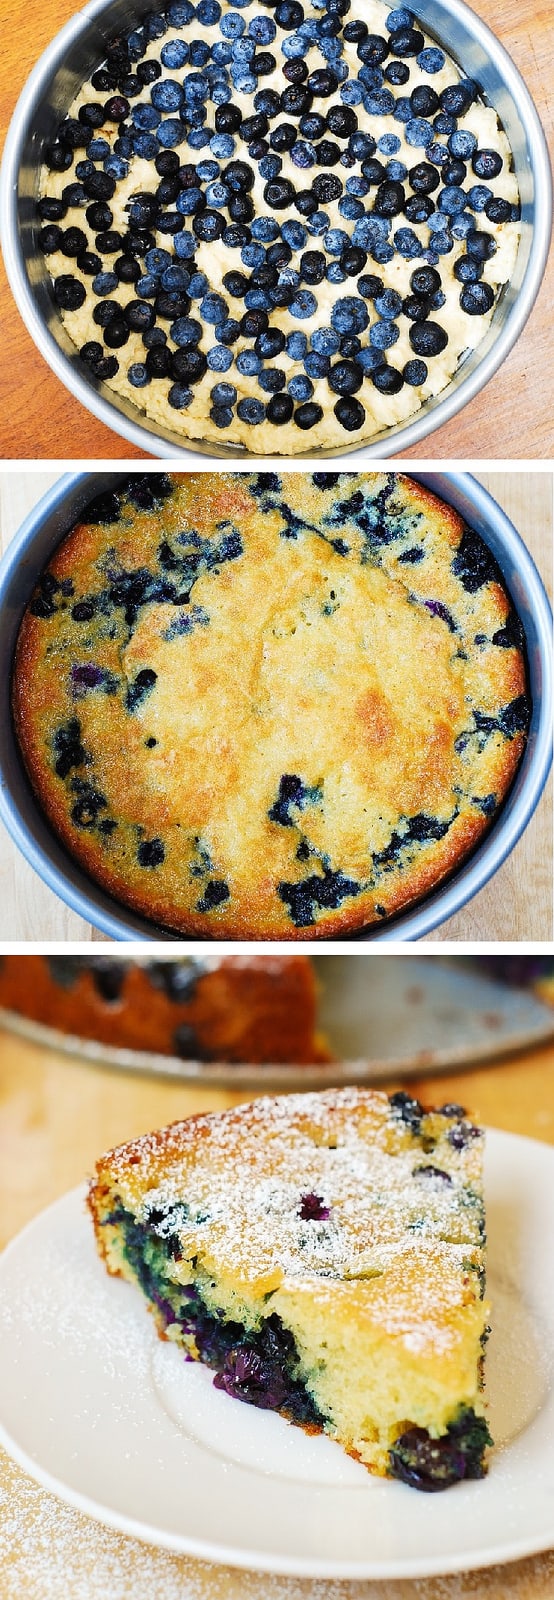 blueberry coffee cake, blueberry buttermilk cake, blueberry cake recipes, blueberry desserts